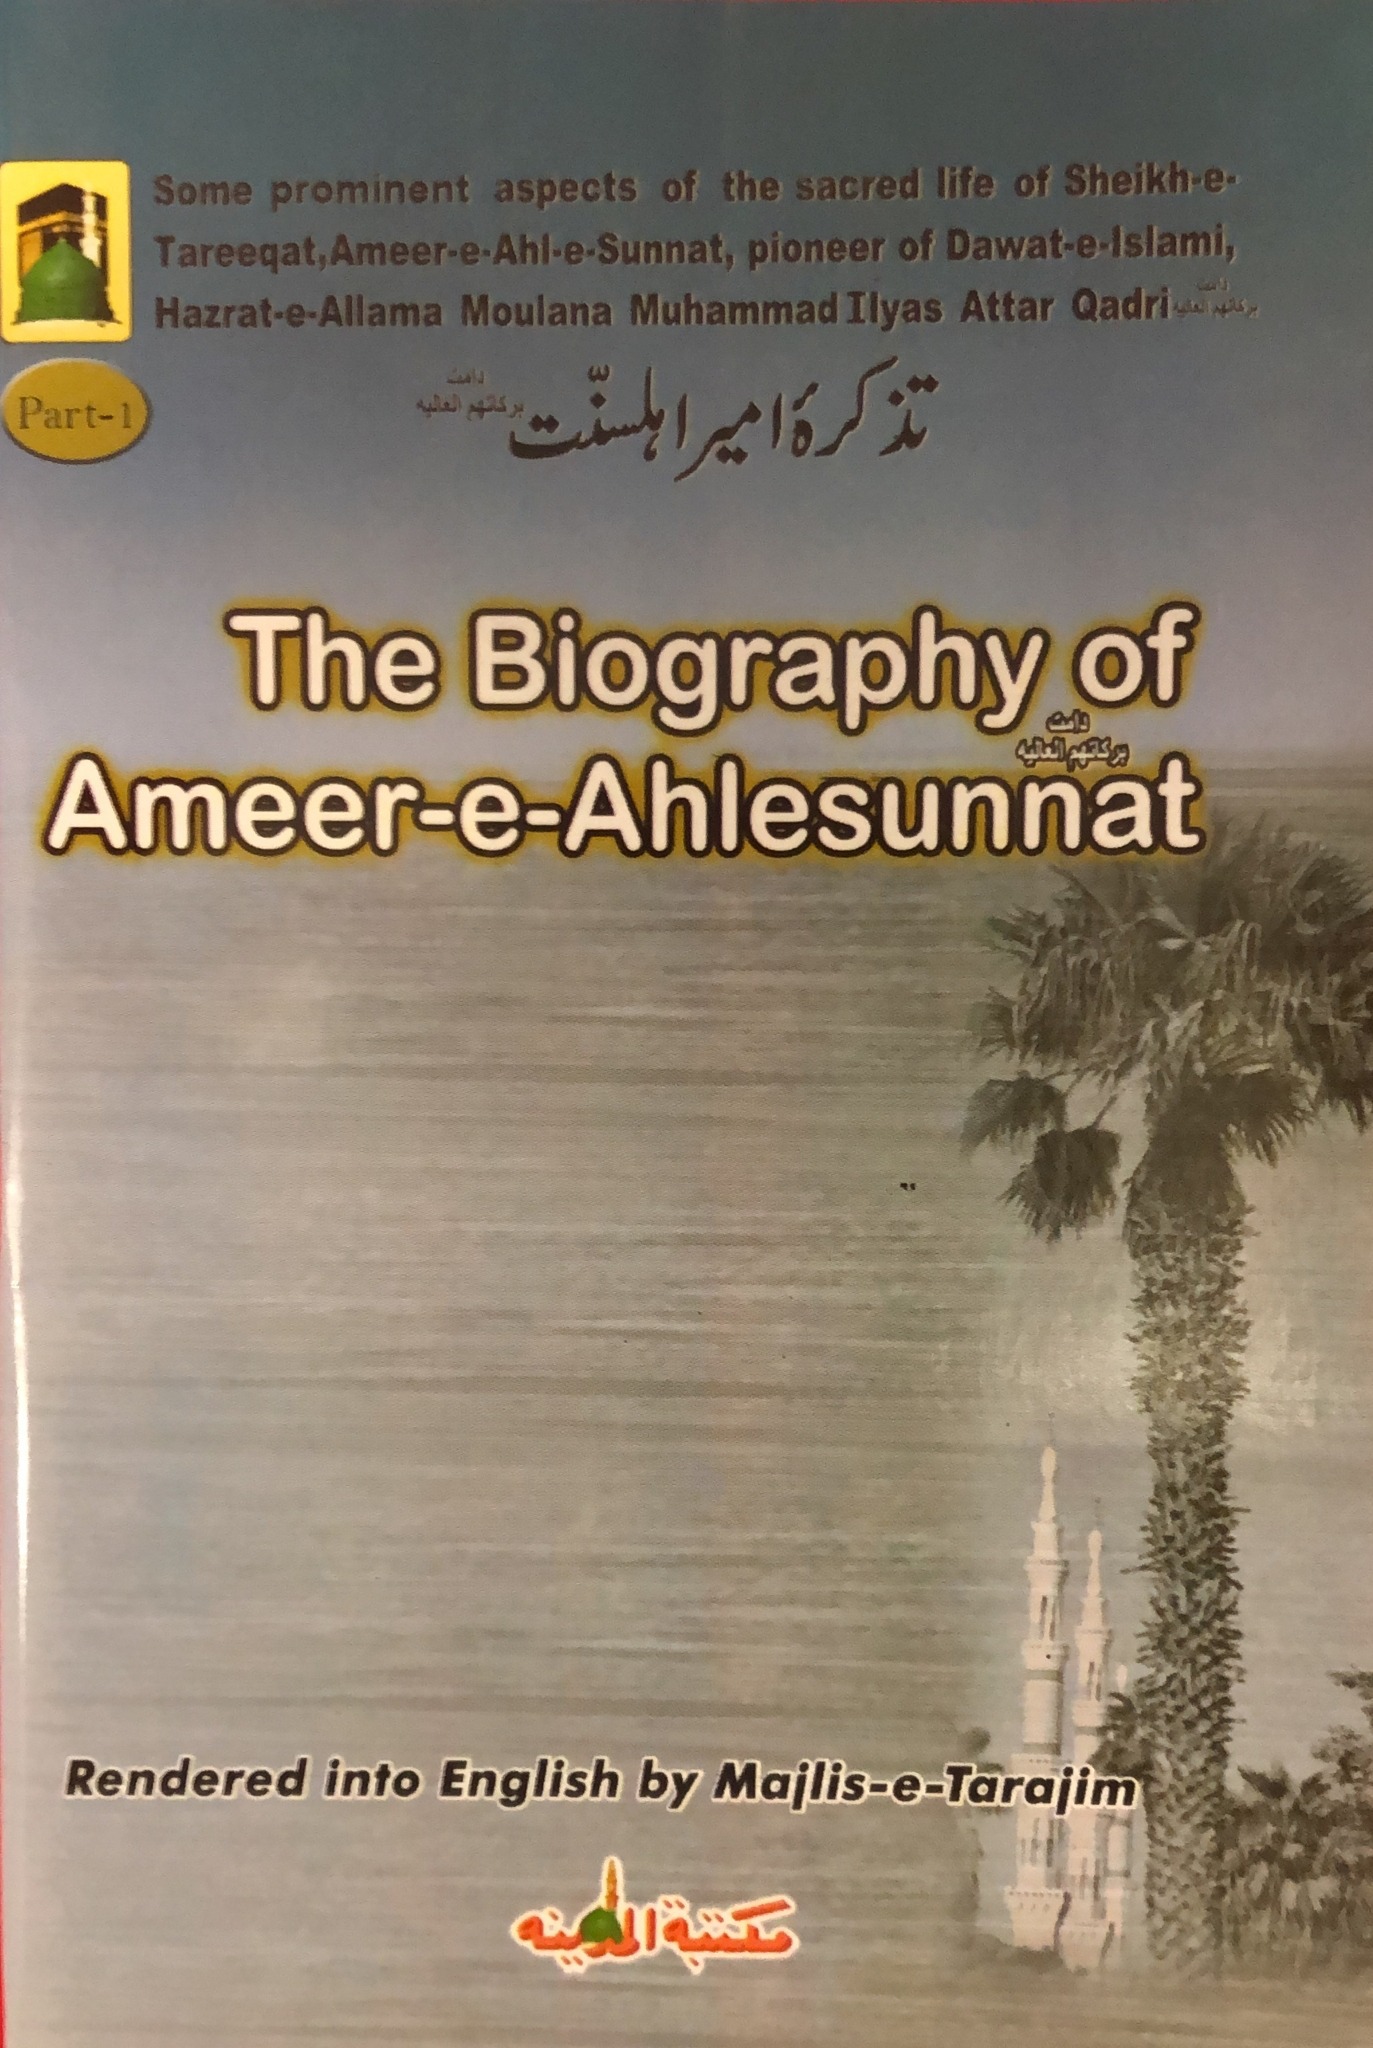 The Biography Of Amir-e-Ahle Sunnat (Part 1)